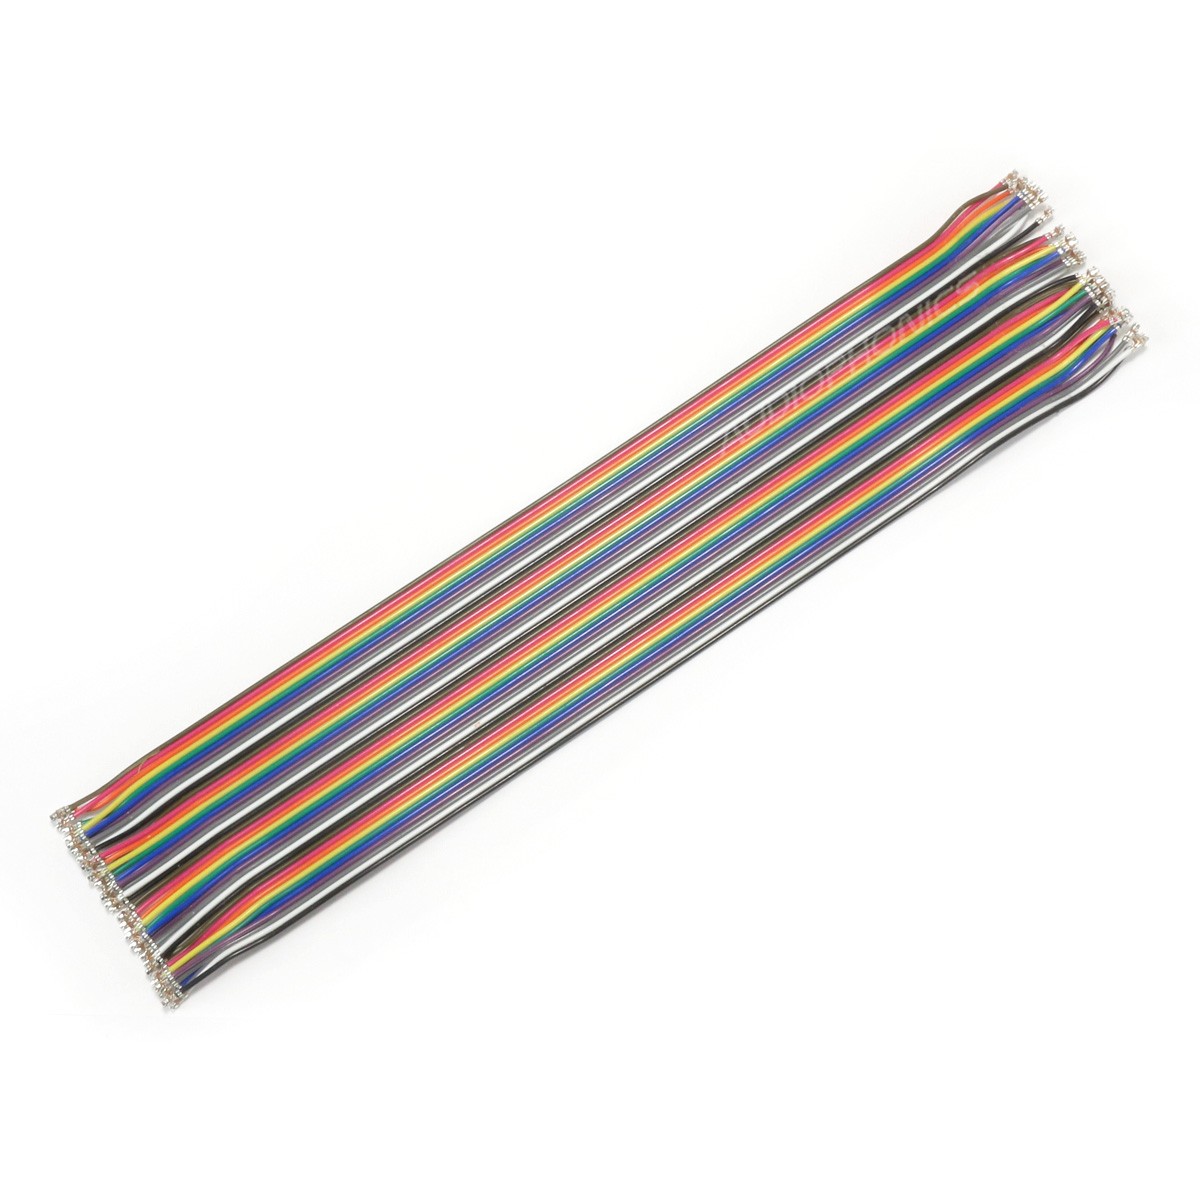 XH 2.54mm Ribbon Cable Female / Female 40 Poles 2 Connector 30cm (Unit)